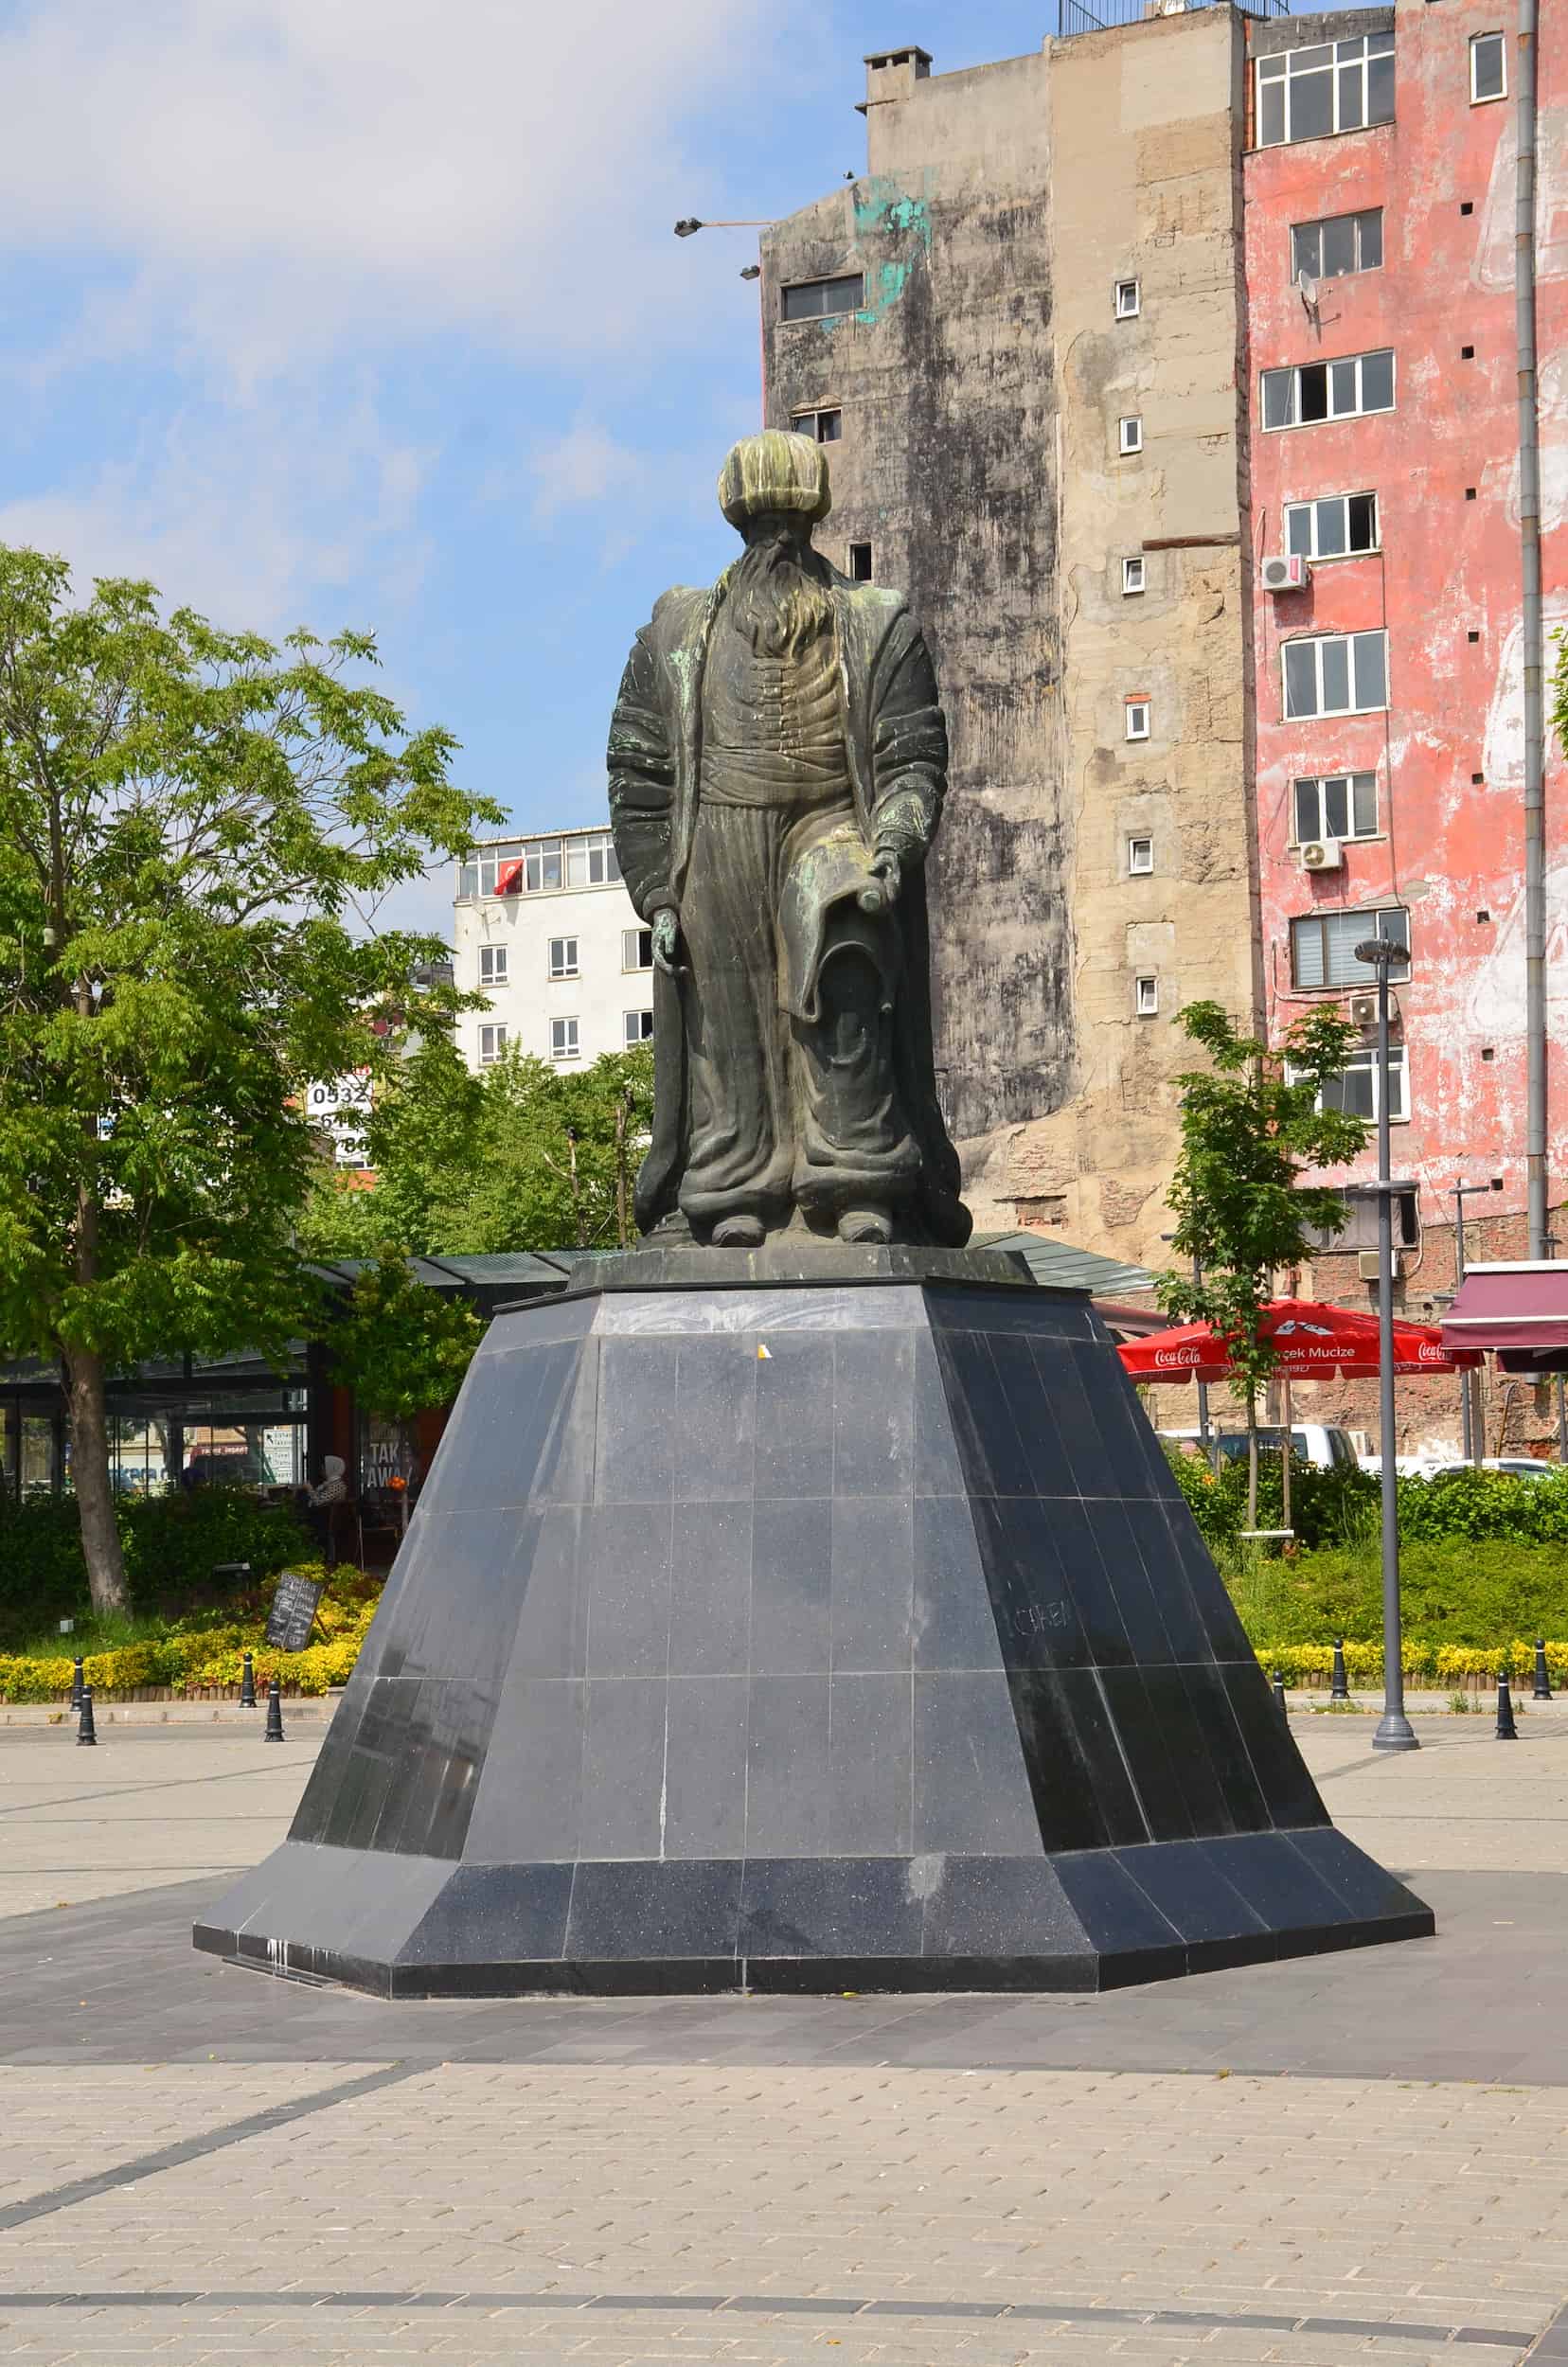 Mimar Sinan statue in Karaköy, Istanbul, Turkey